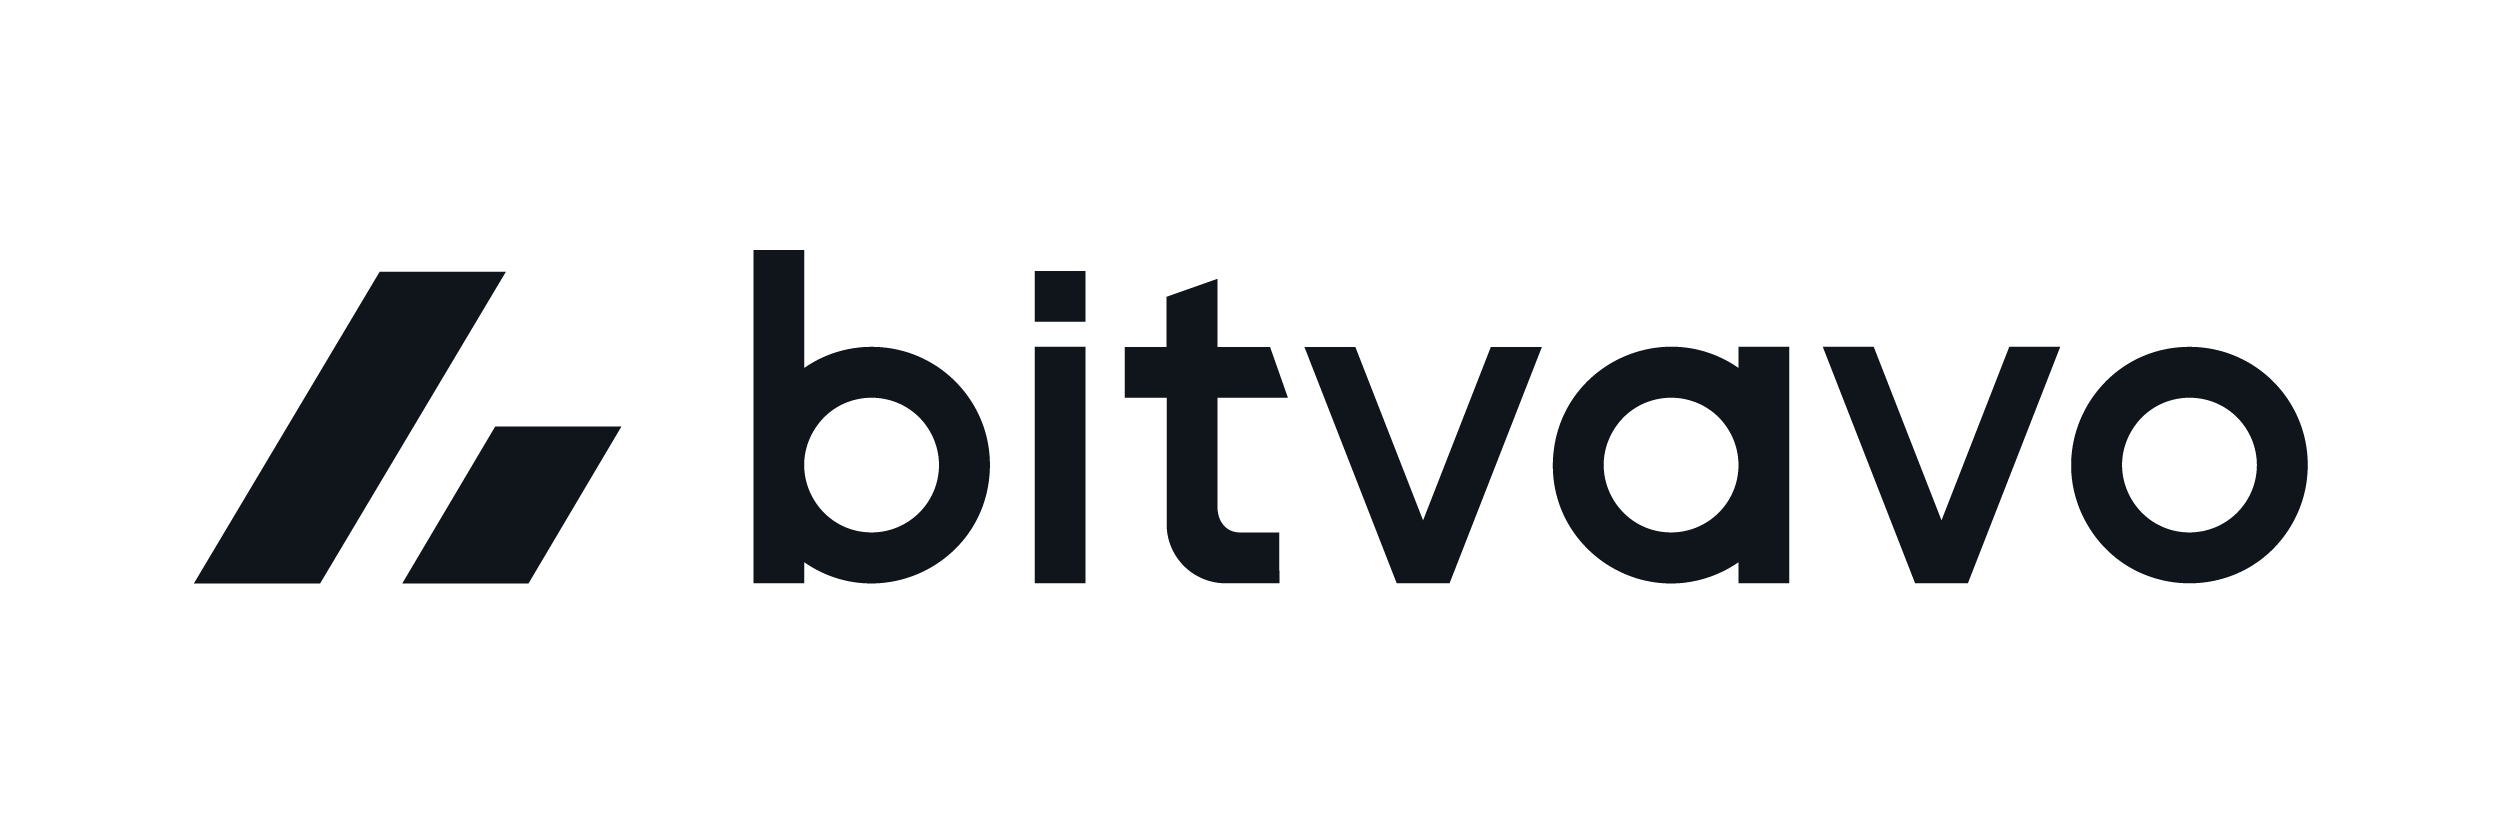 bitvavo mark and logo black